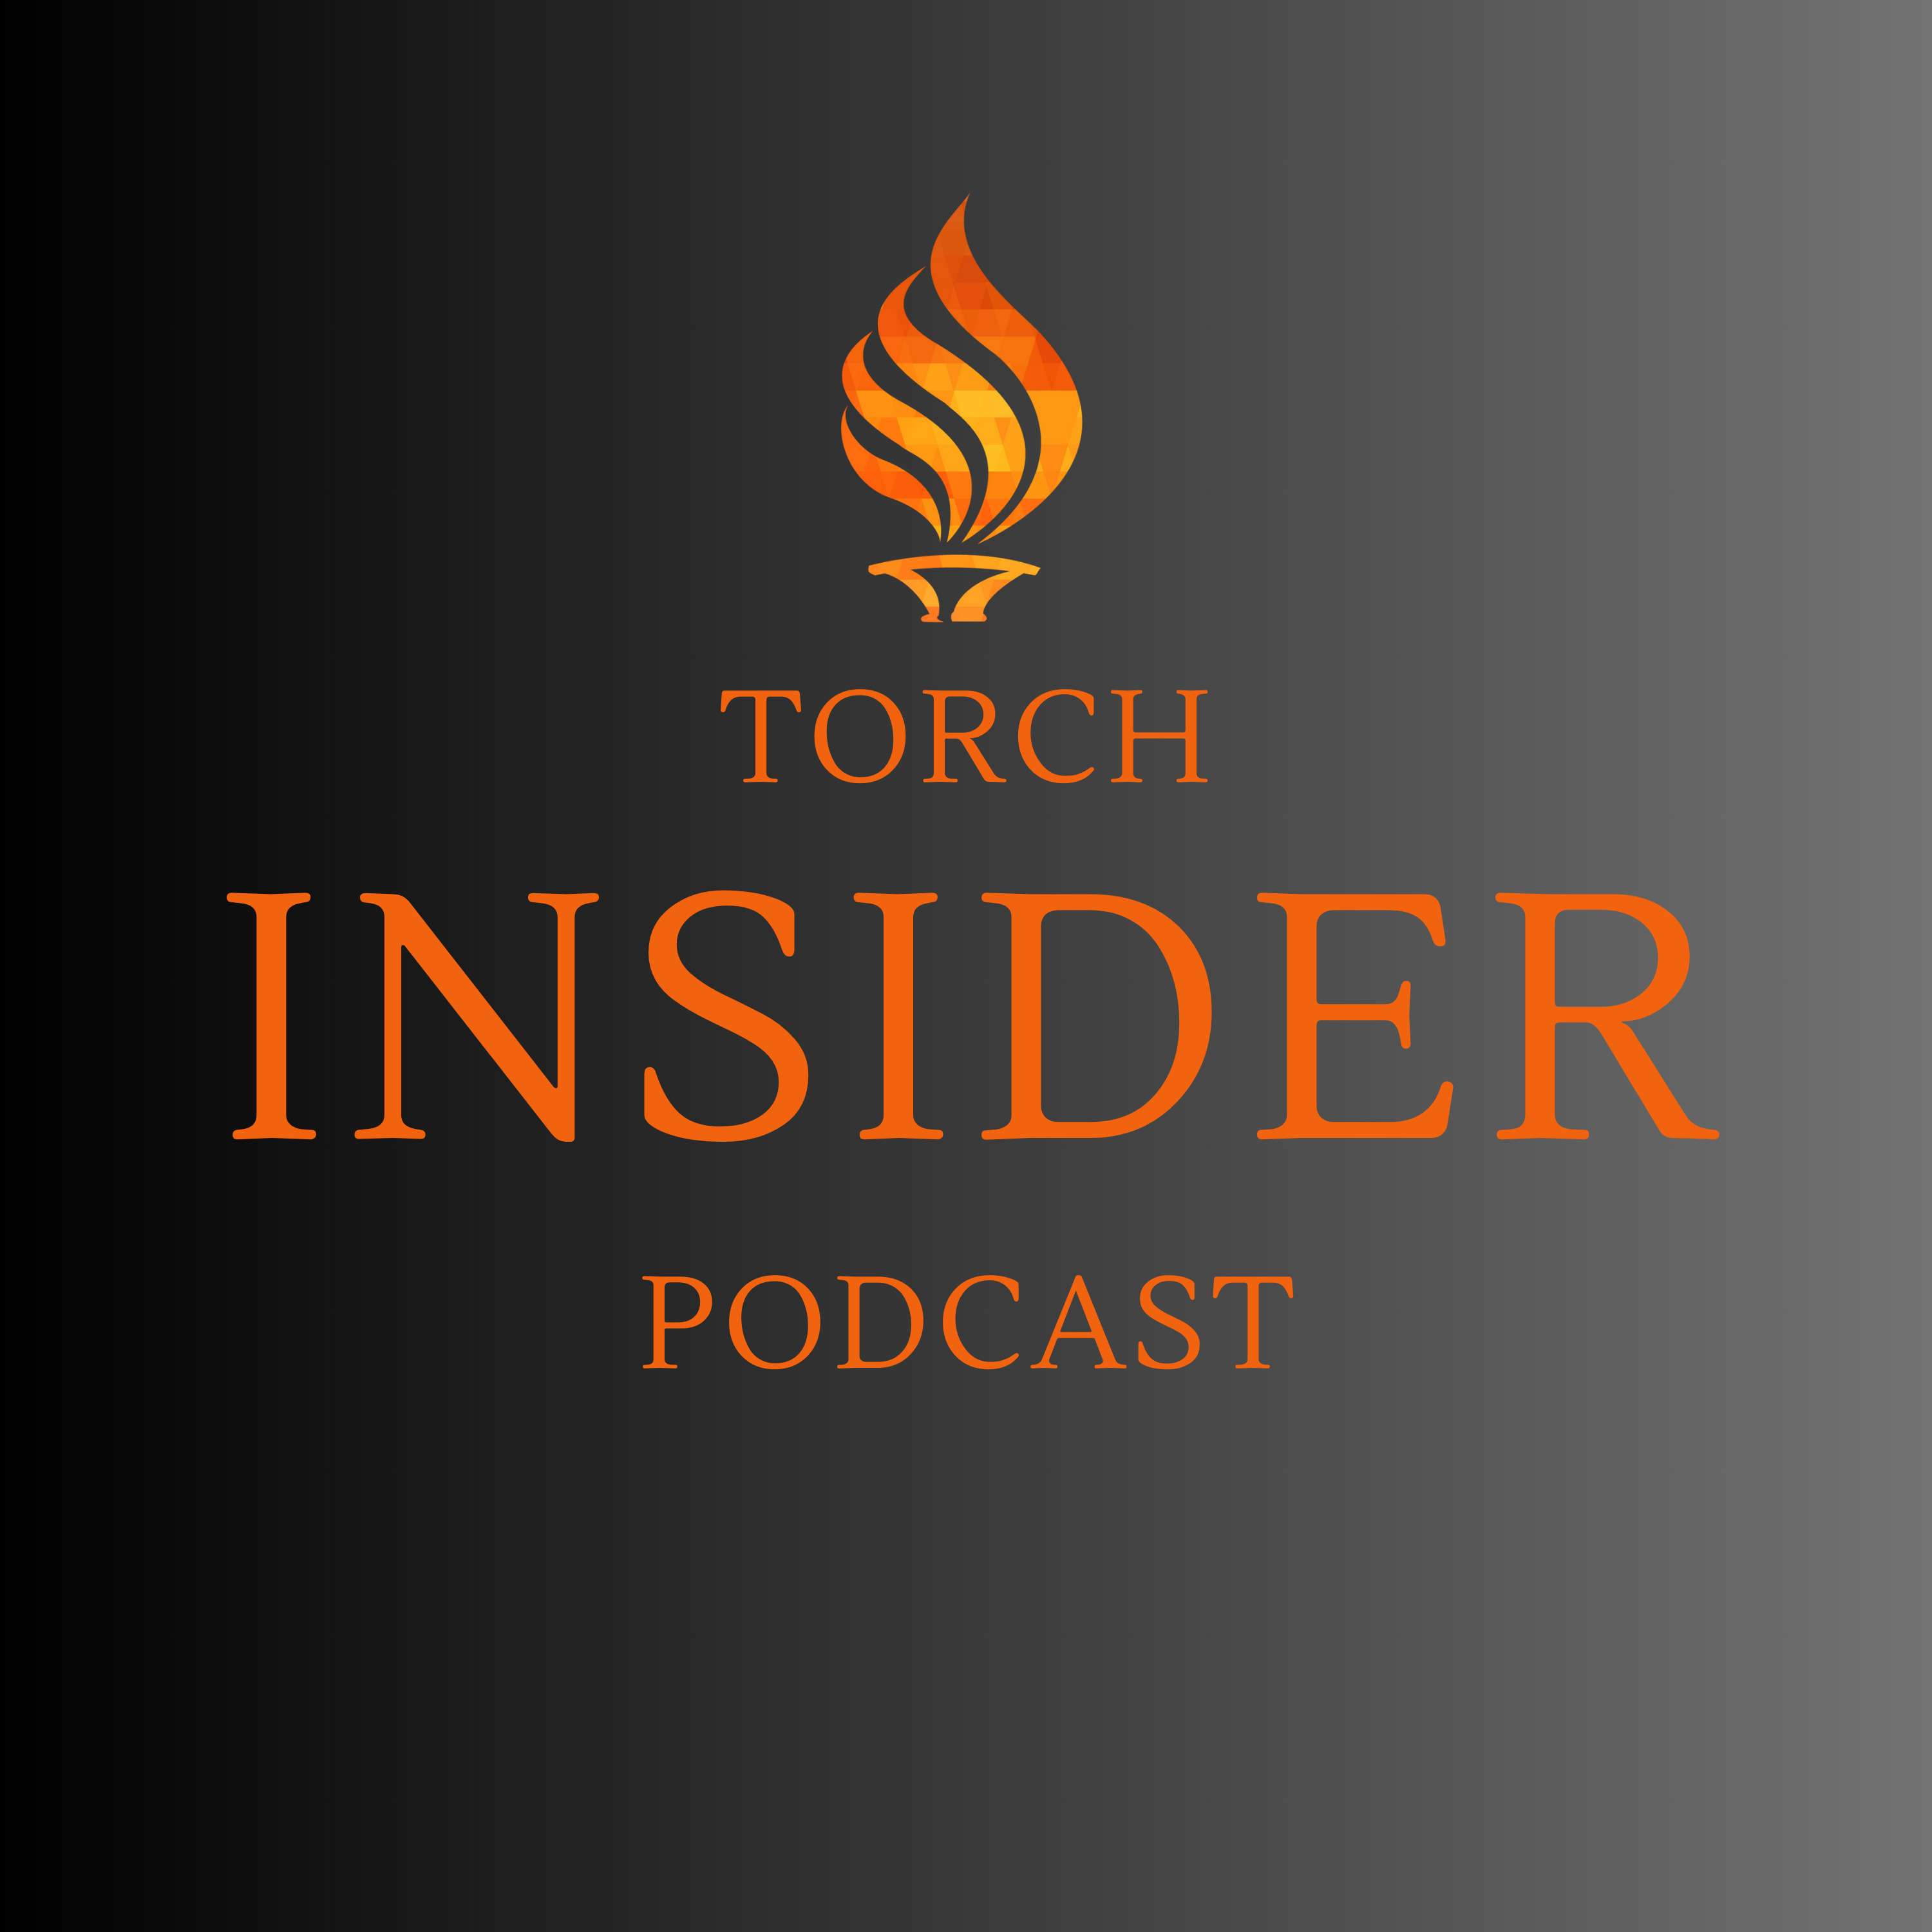 TORCH Insider Podcast